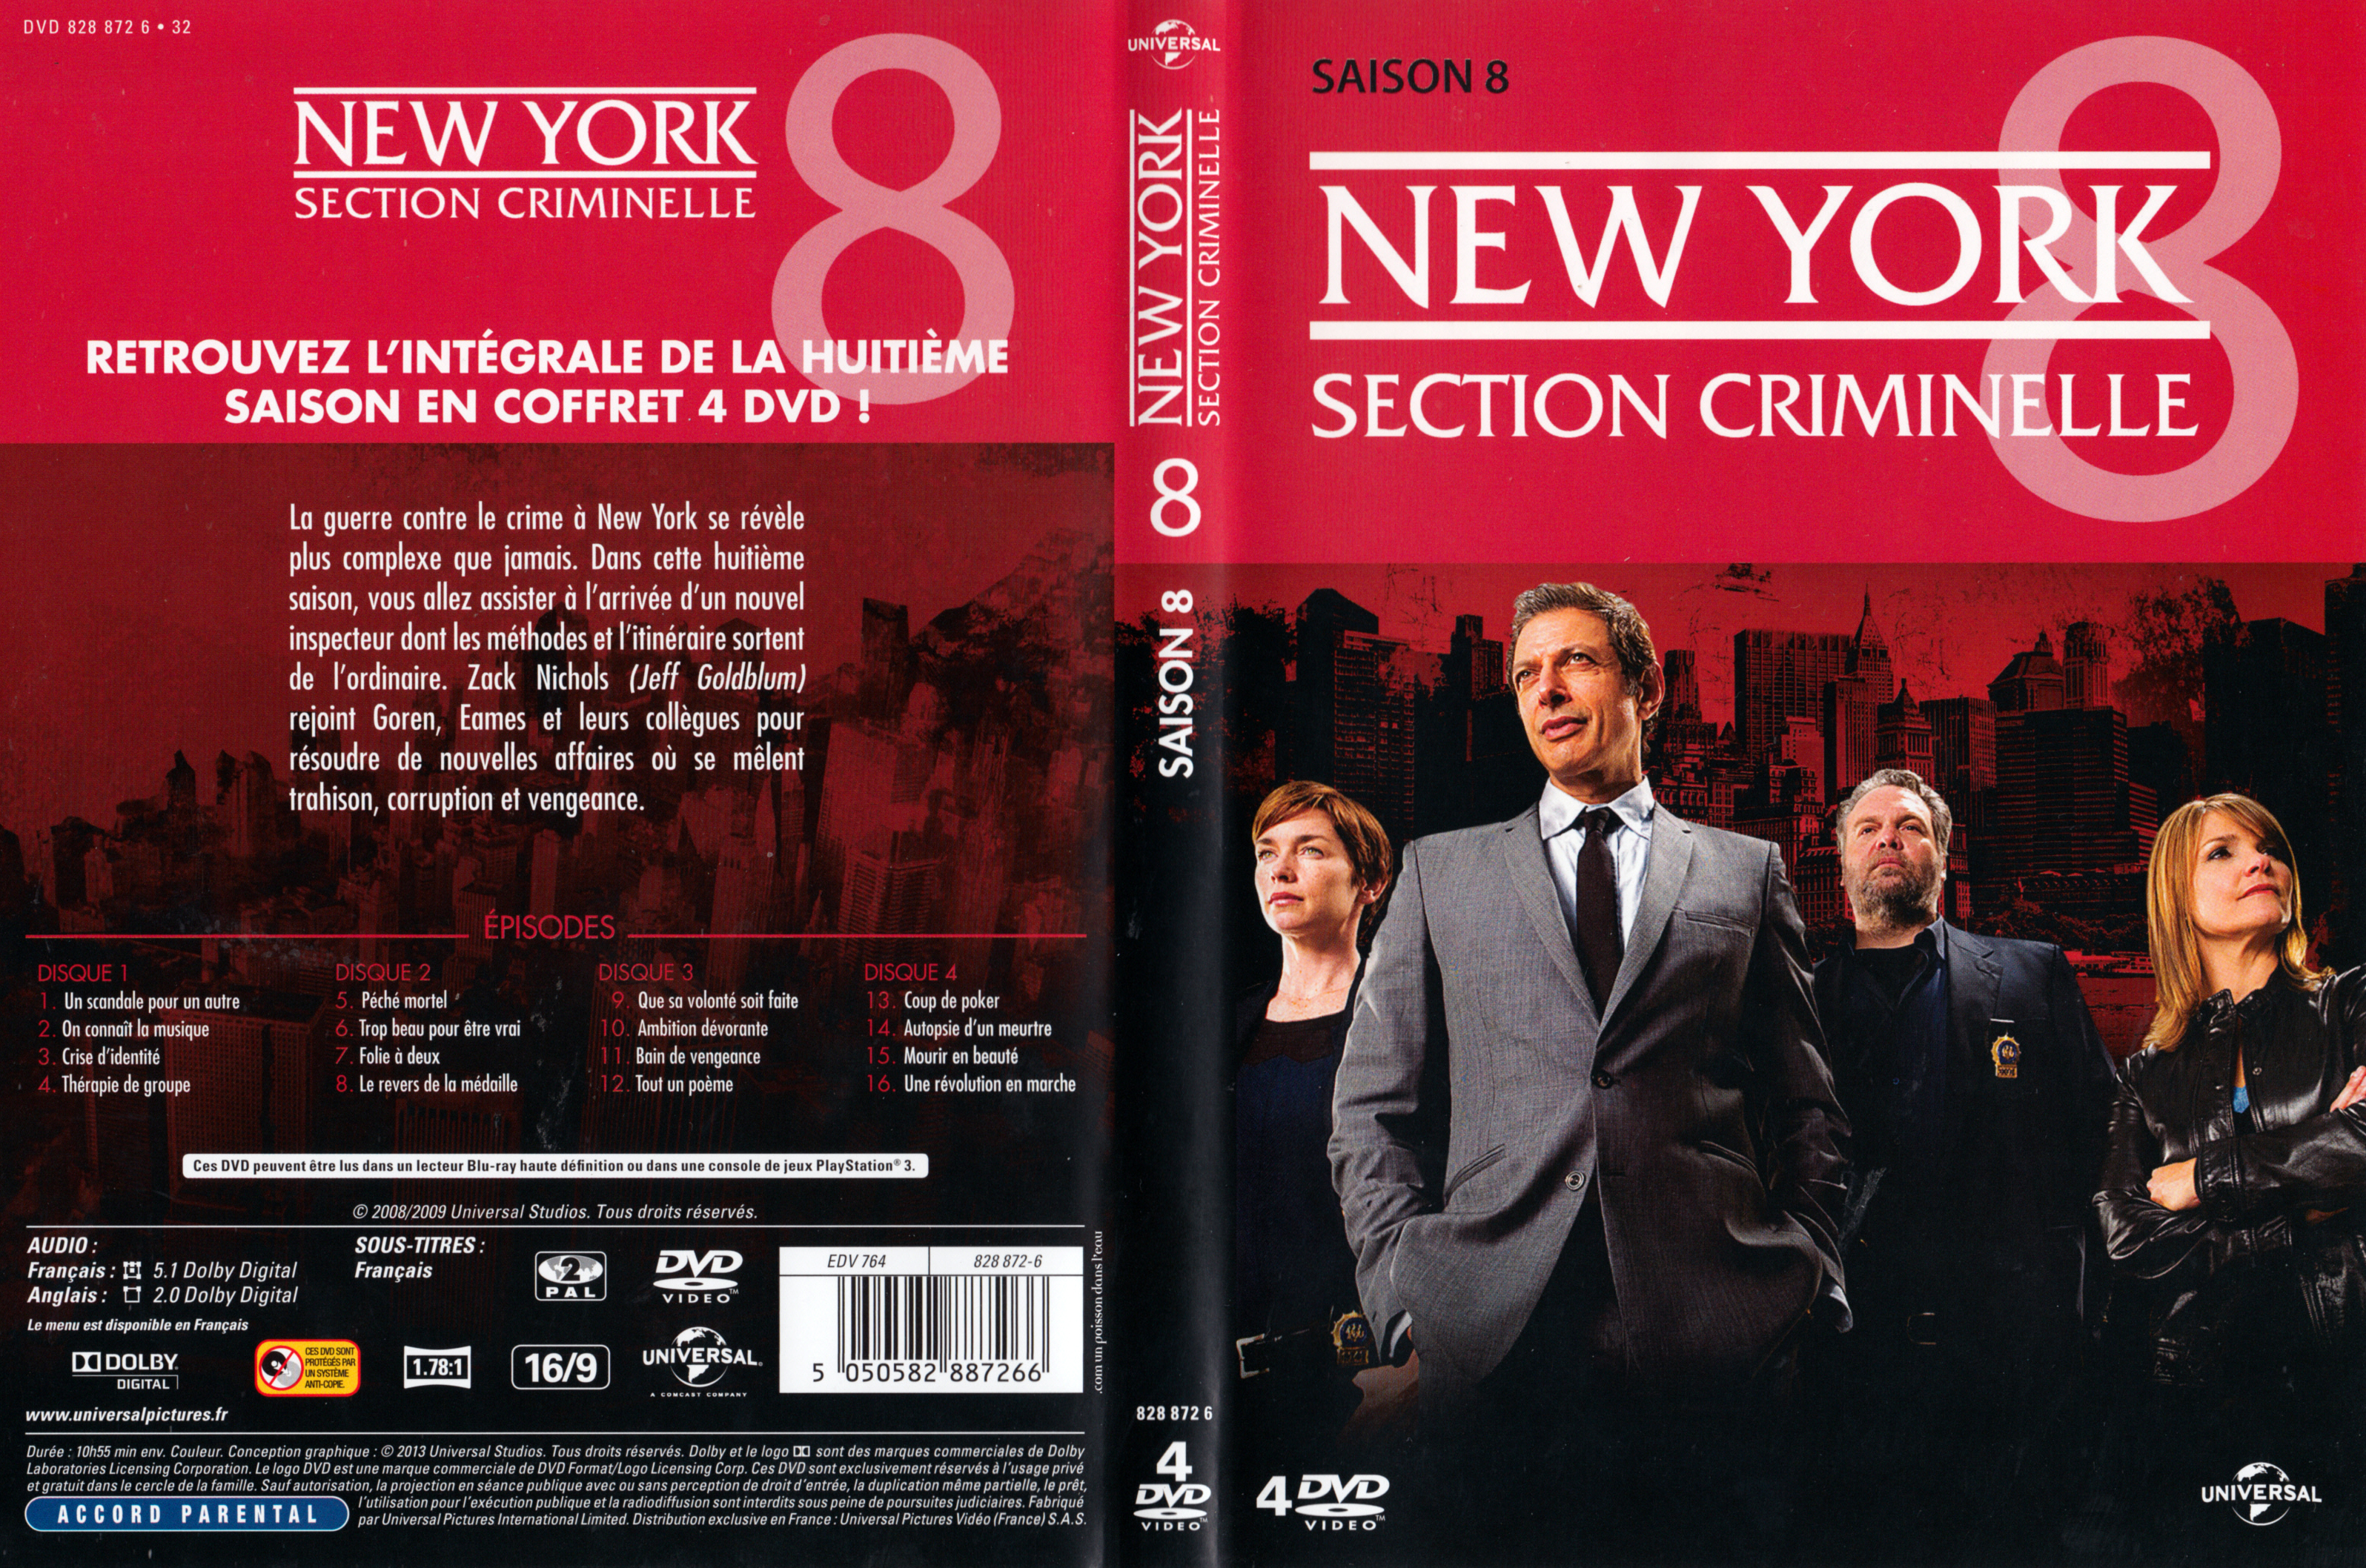 Jaquette DVD New york section criminelle saison 8 v2